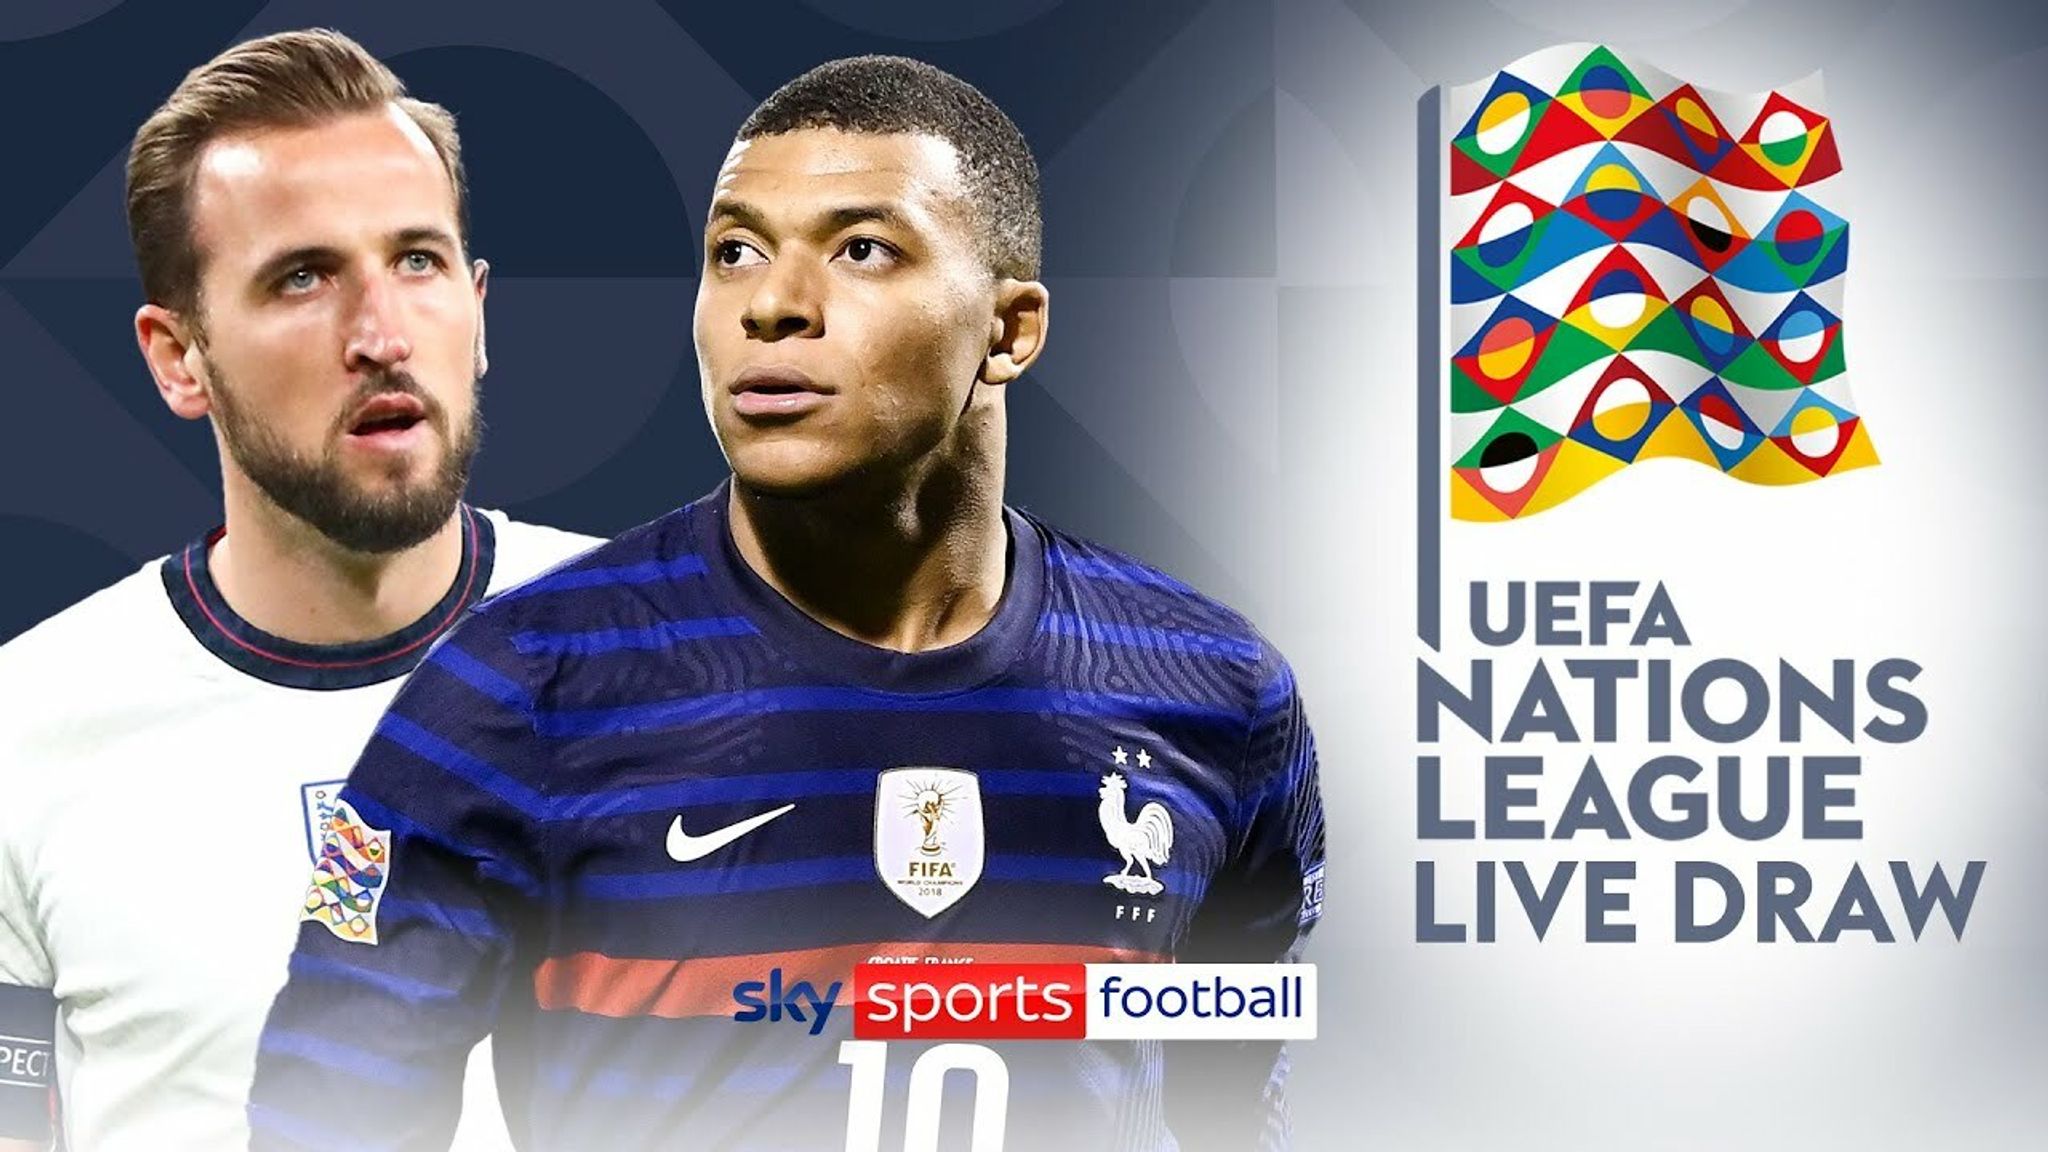 LIVE STREAM UEFA Nations League draw Football News Sky Sports